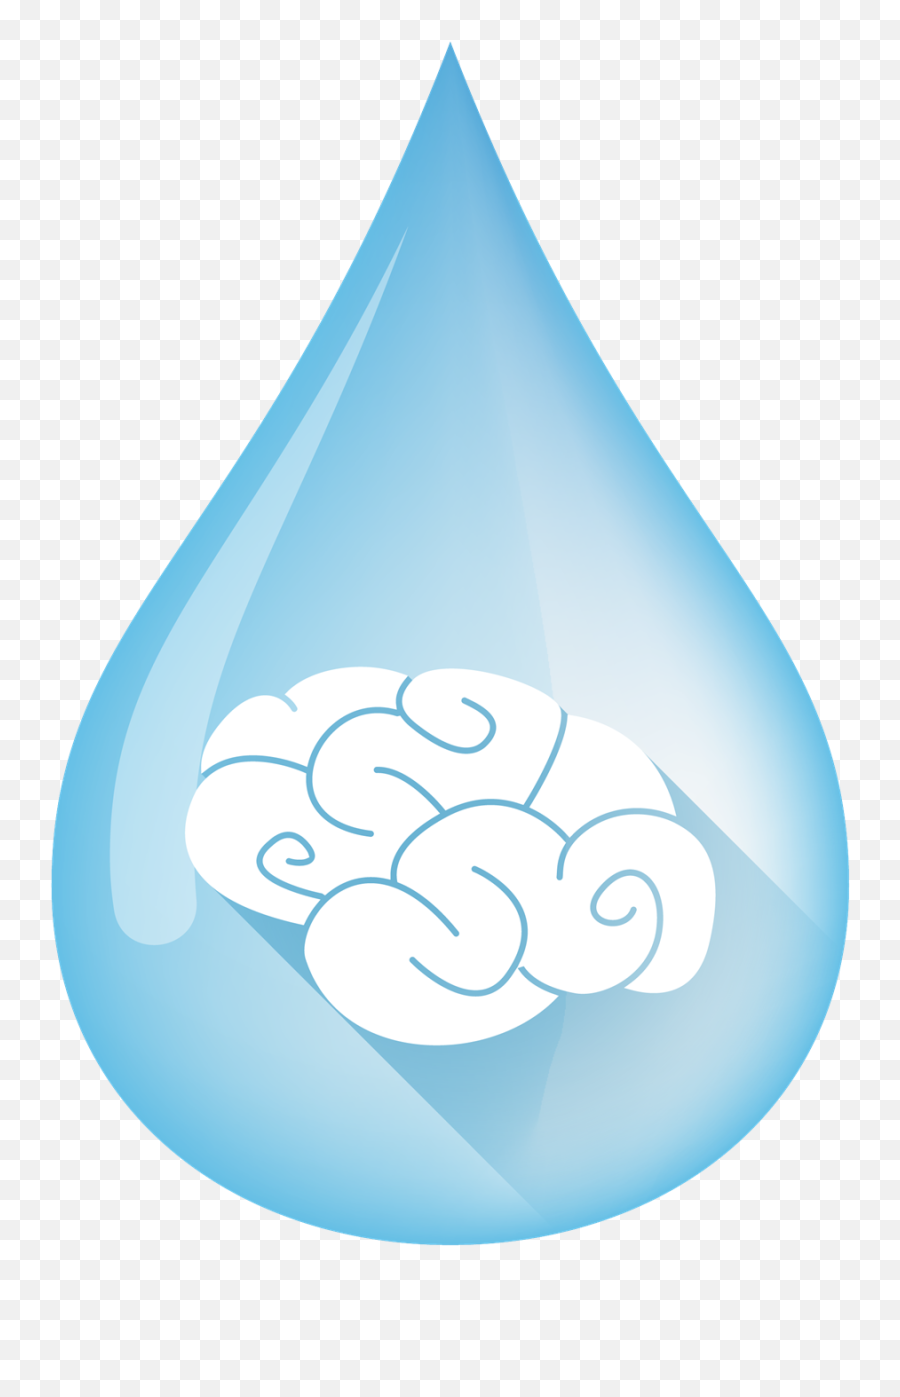 Your Brain Needs Water Drink Up - Drop Emoji,Water Emotions